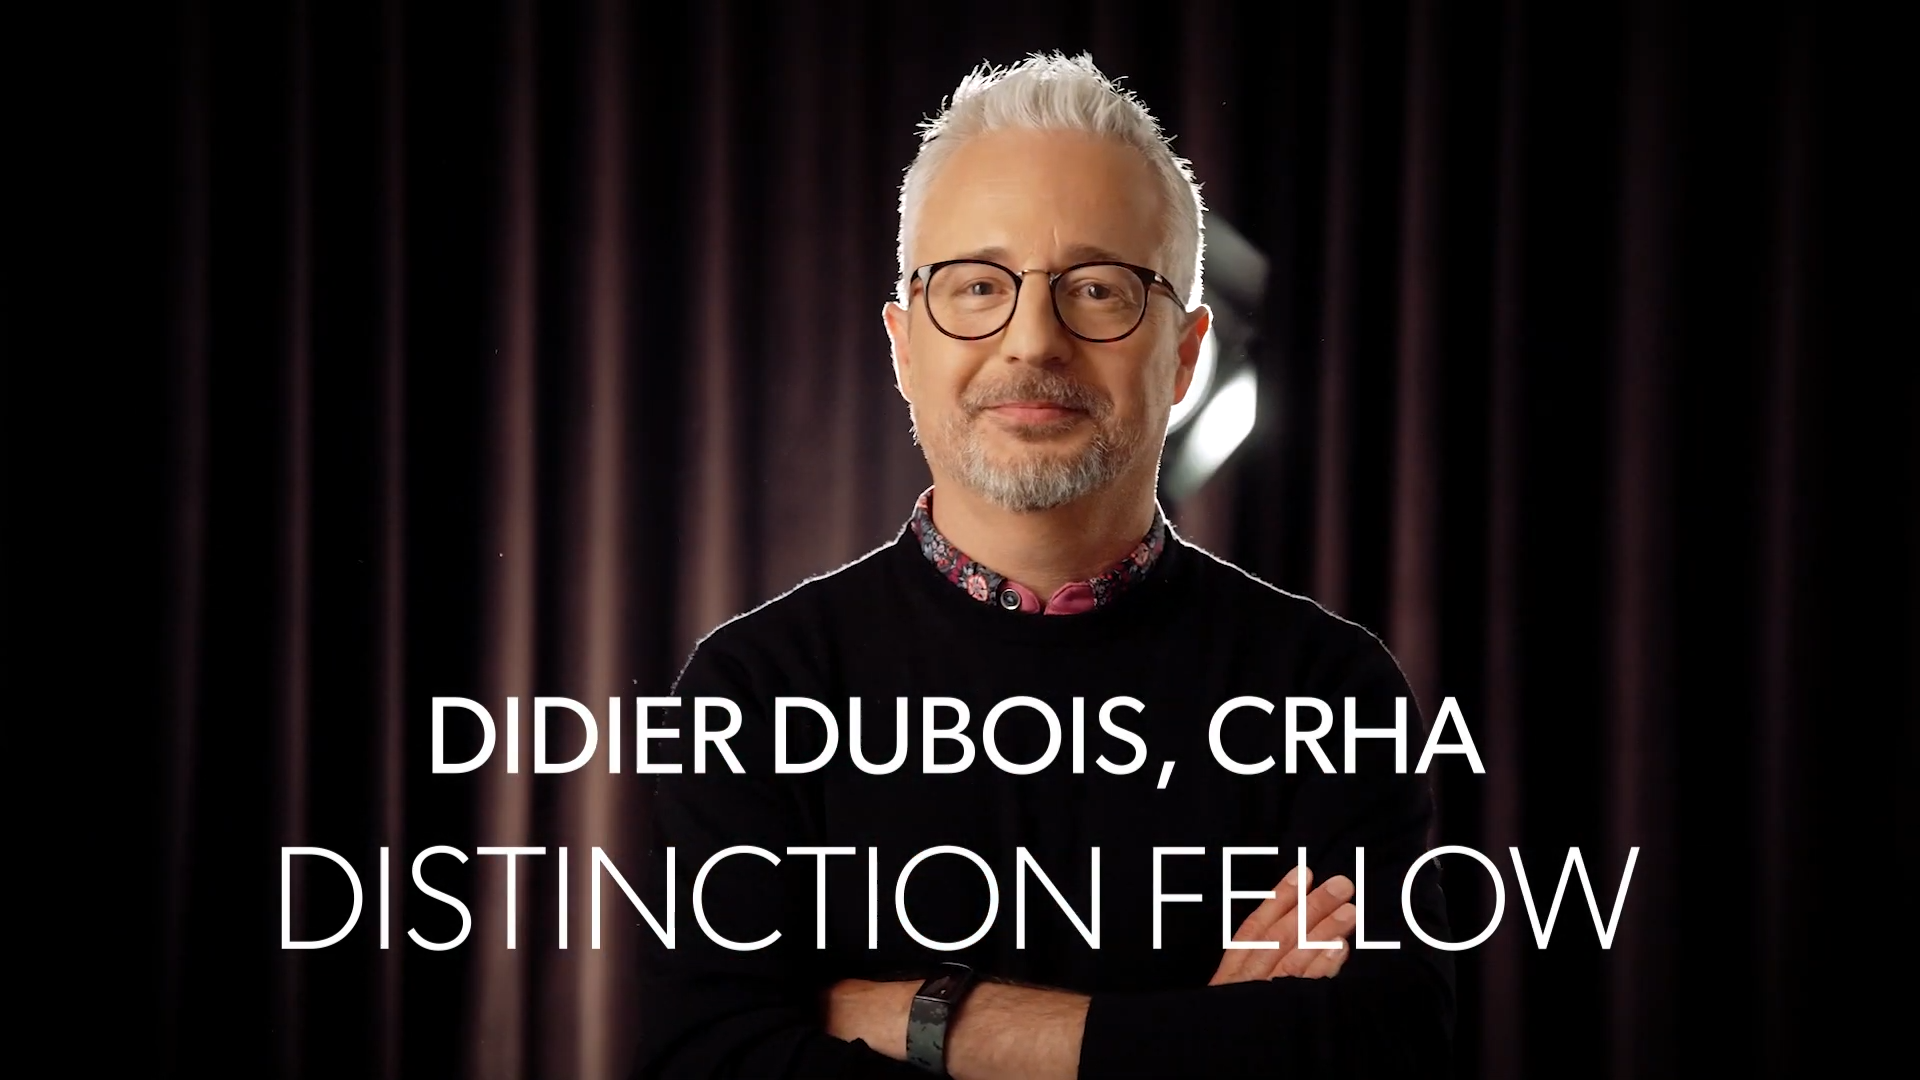 Distinction Fellow - Didier Dubois, CRHA 0-8 screenshot.png